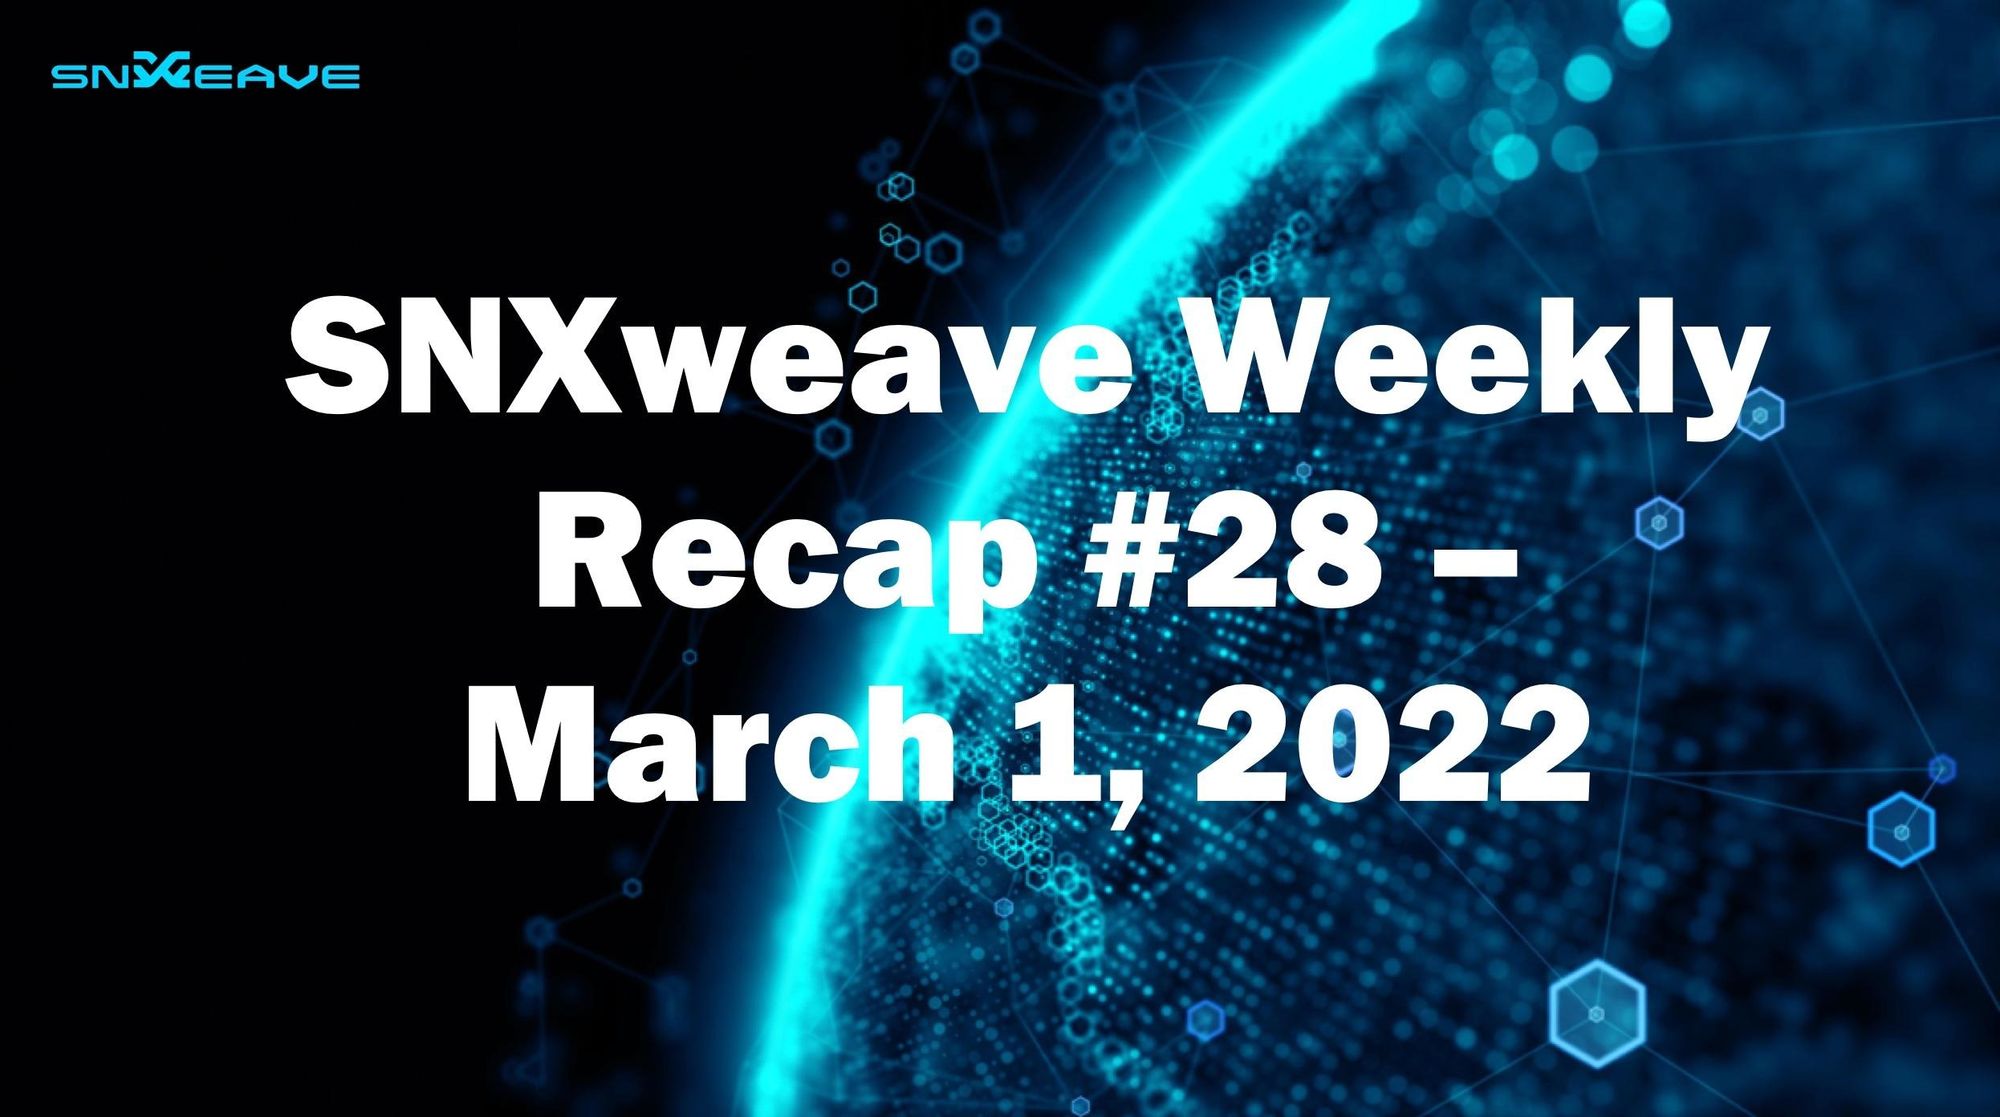 SNXweave Weekly Recap 28